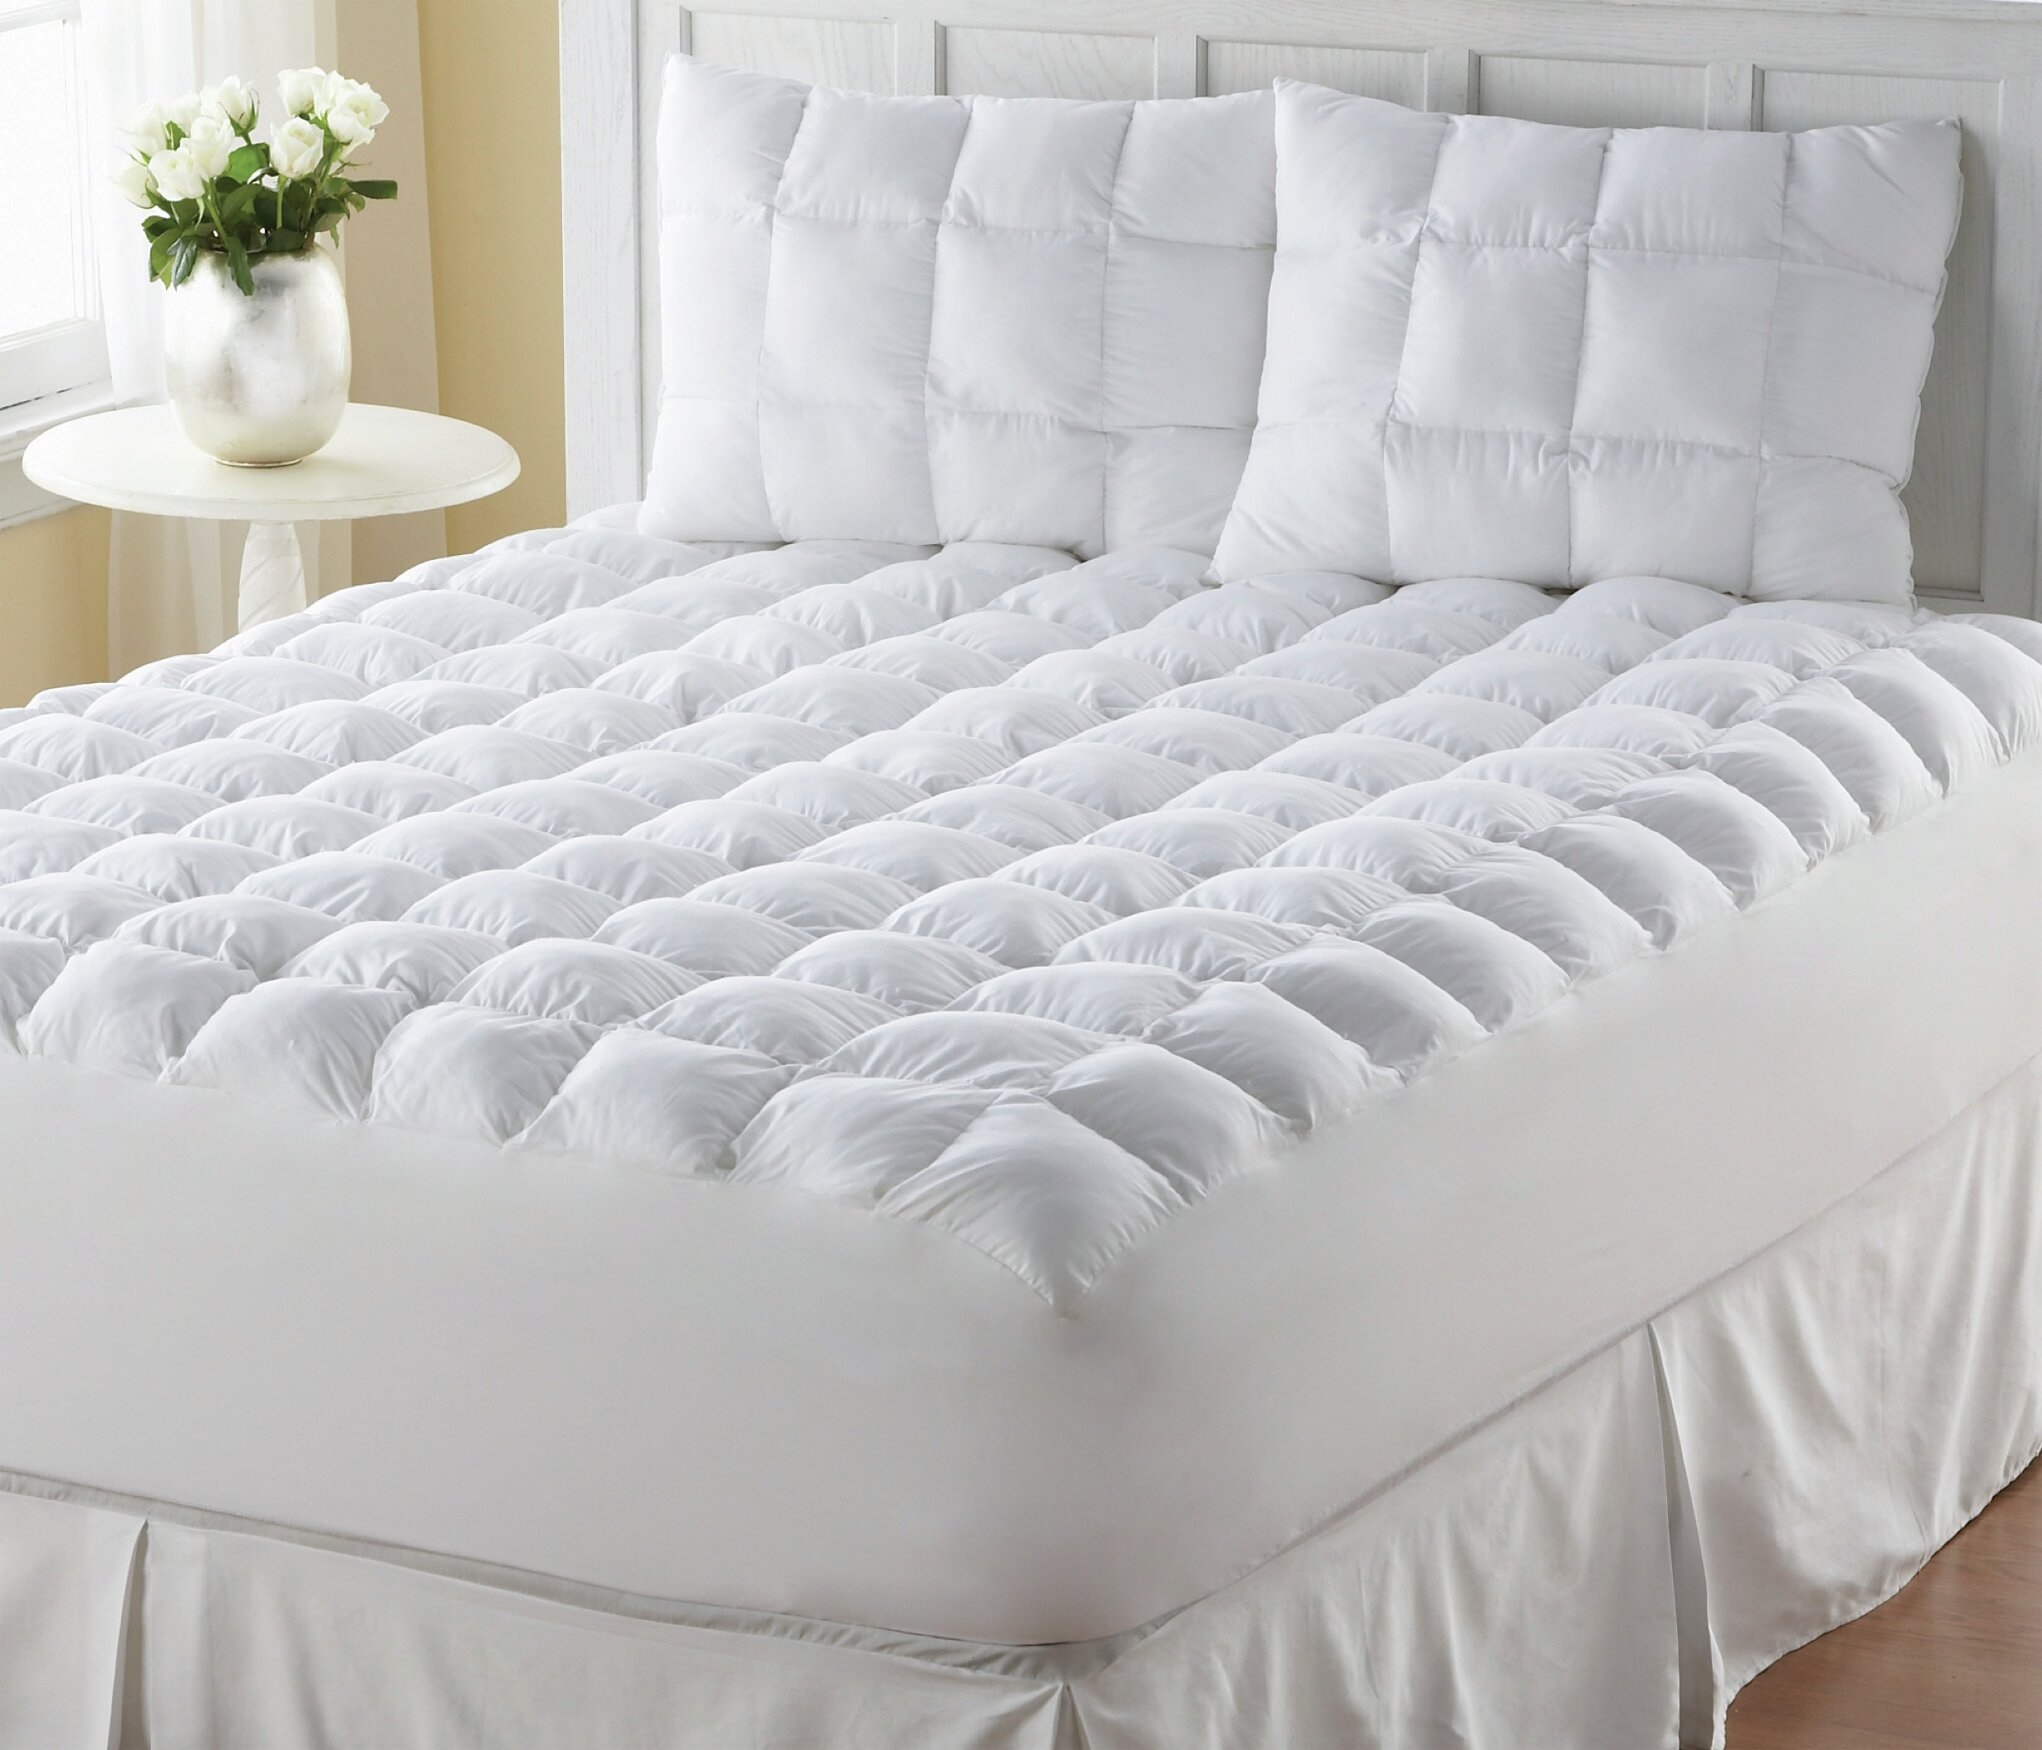 Cotton mattresses 5